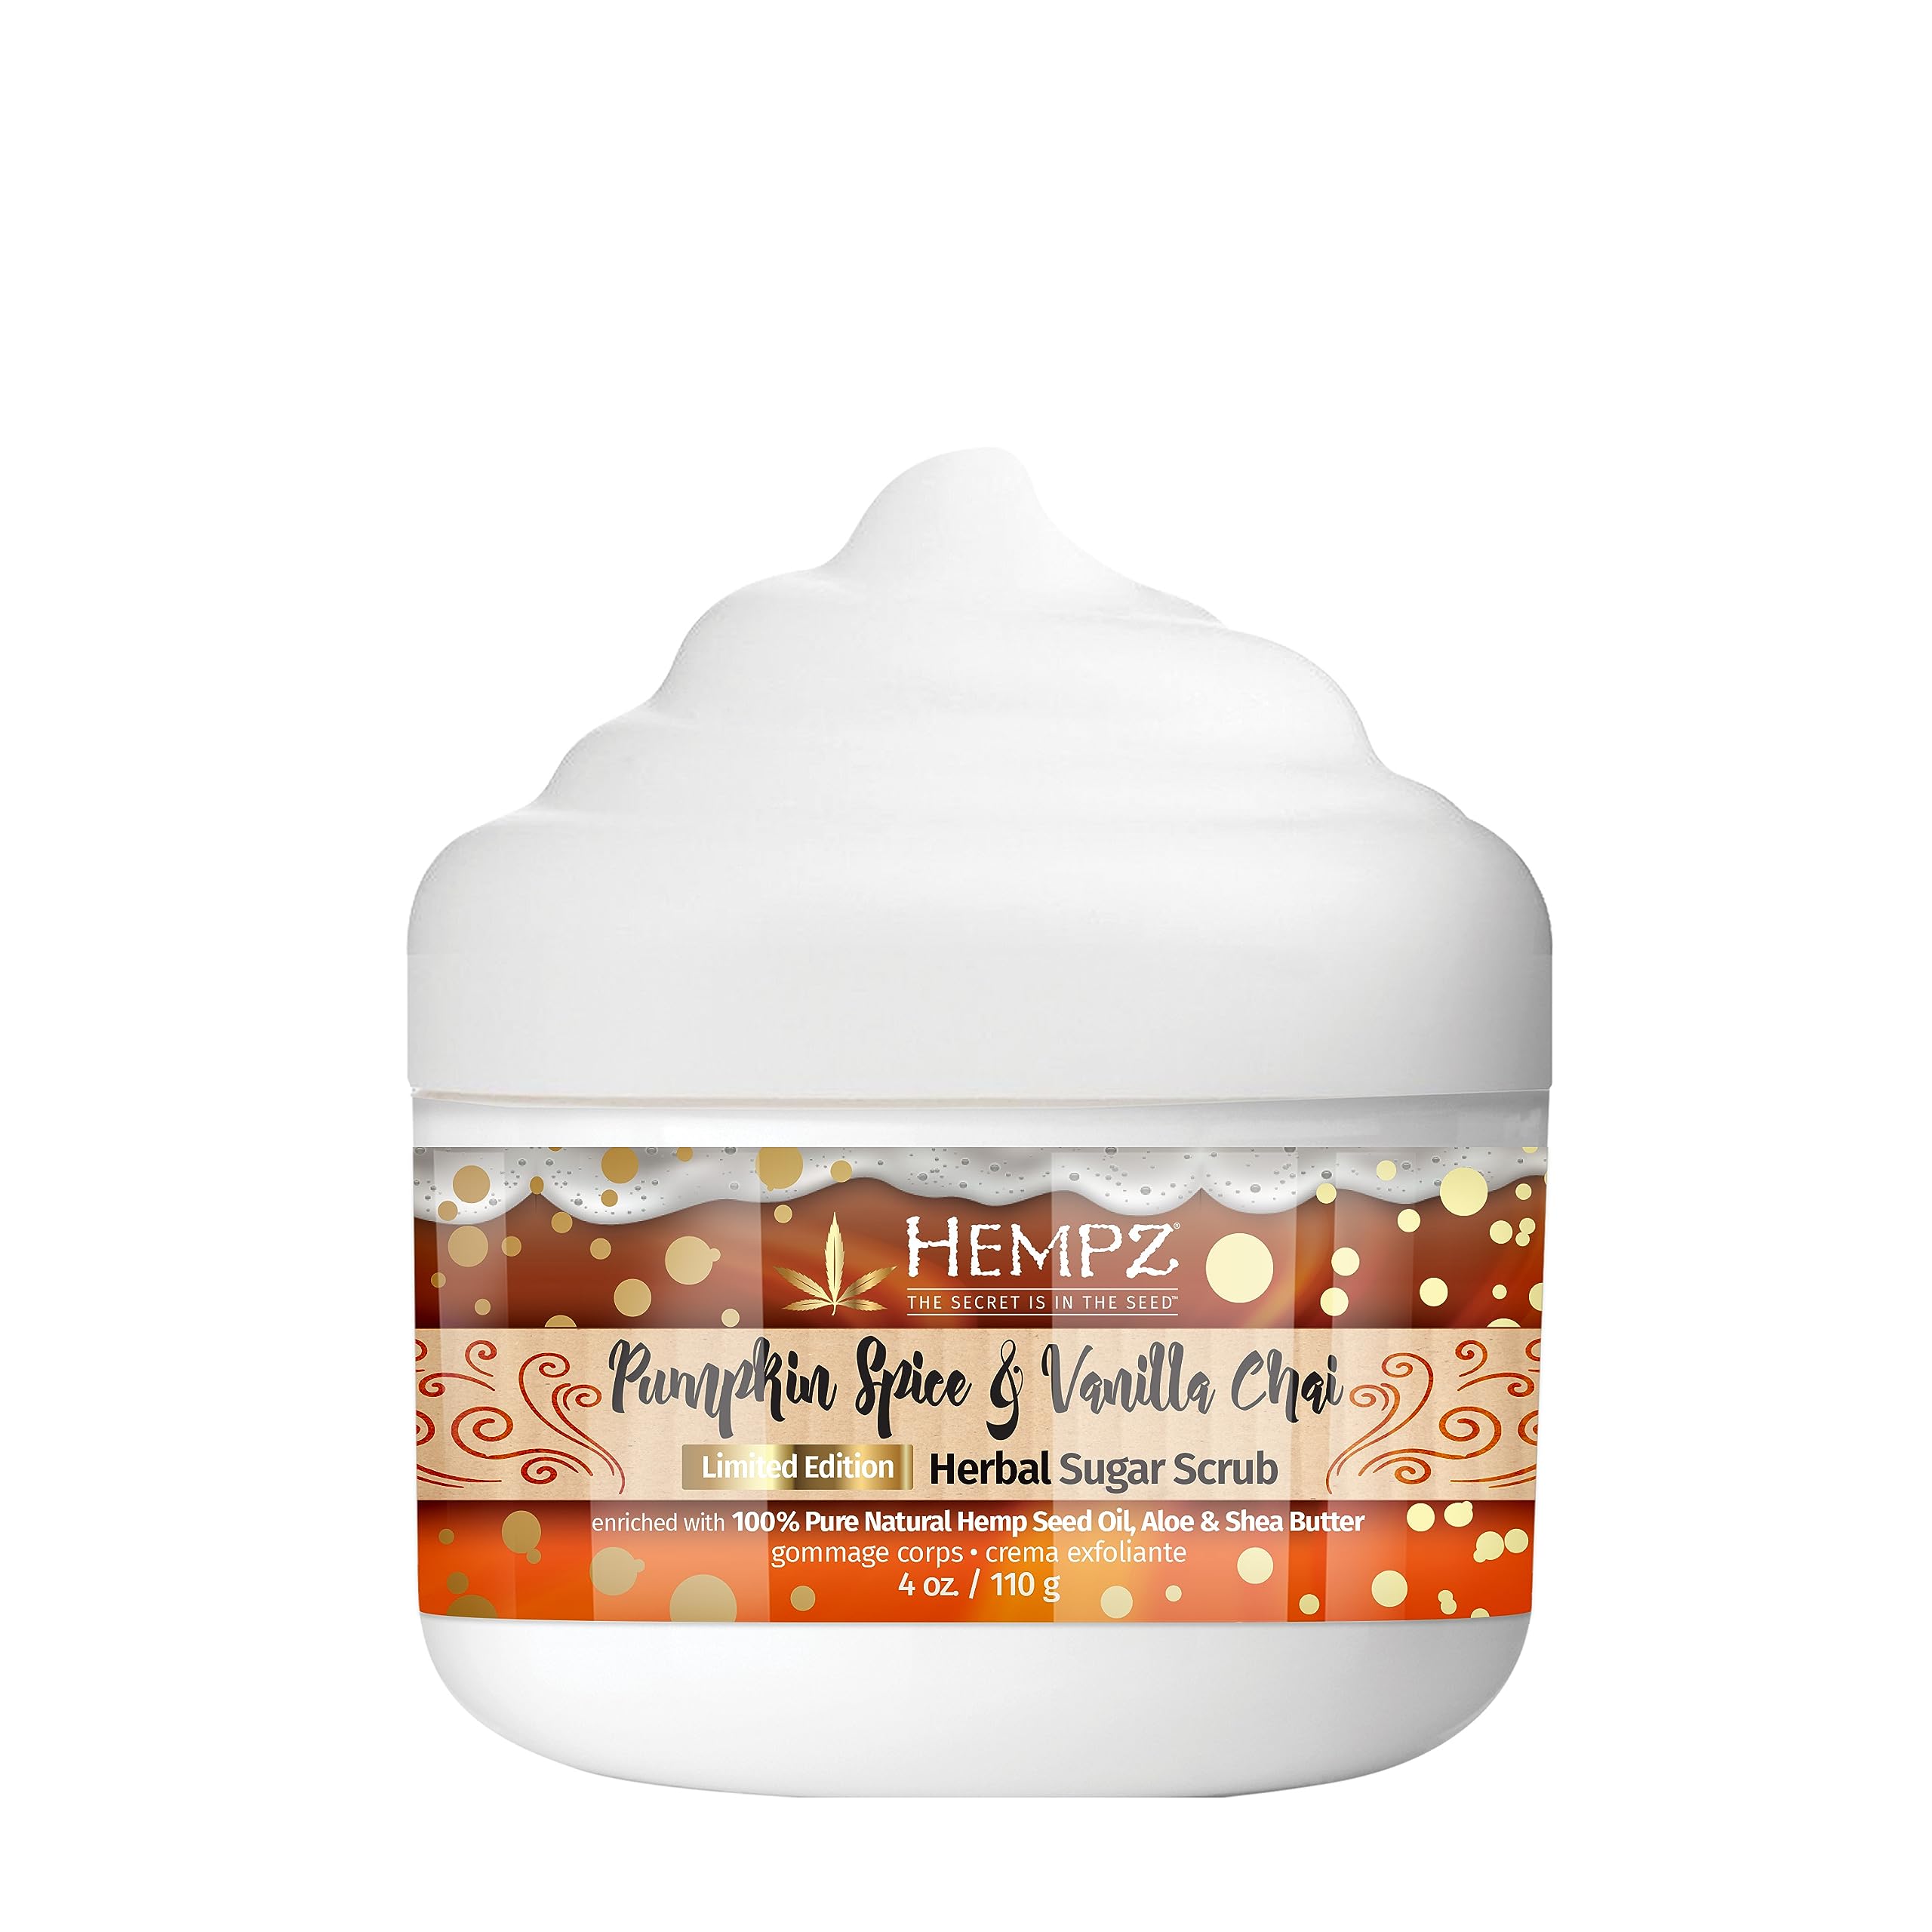 4-Oz Hempz Scented Herbal Sugar Exfoliating Body Scrub (Pumpkin Spice & Vanilla Chai) $4.66 w/ S&S + Free Shipping w/ Prime or on $35+